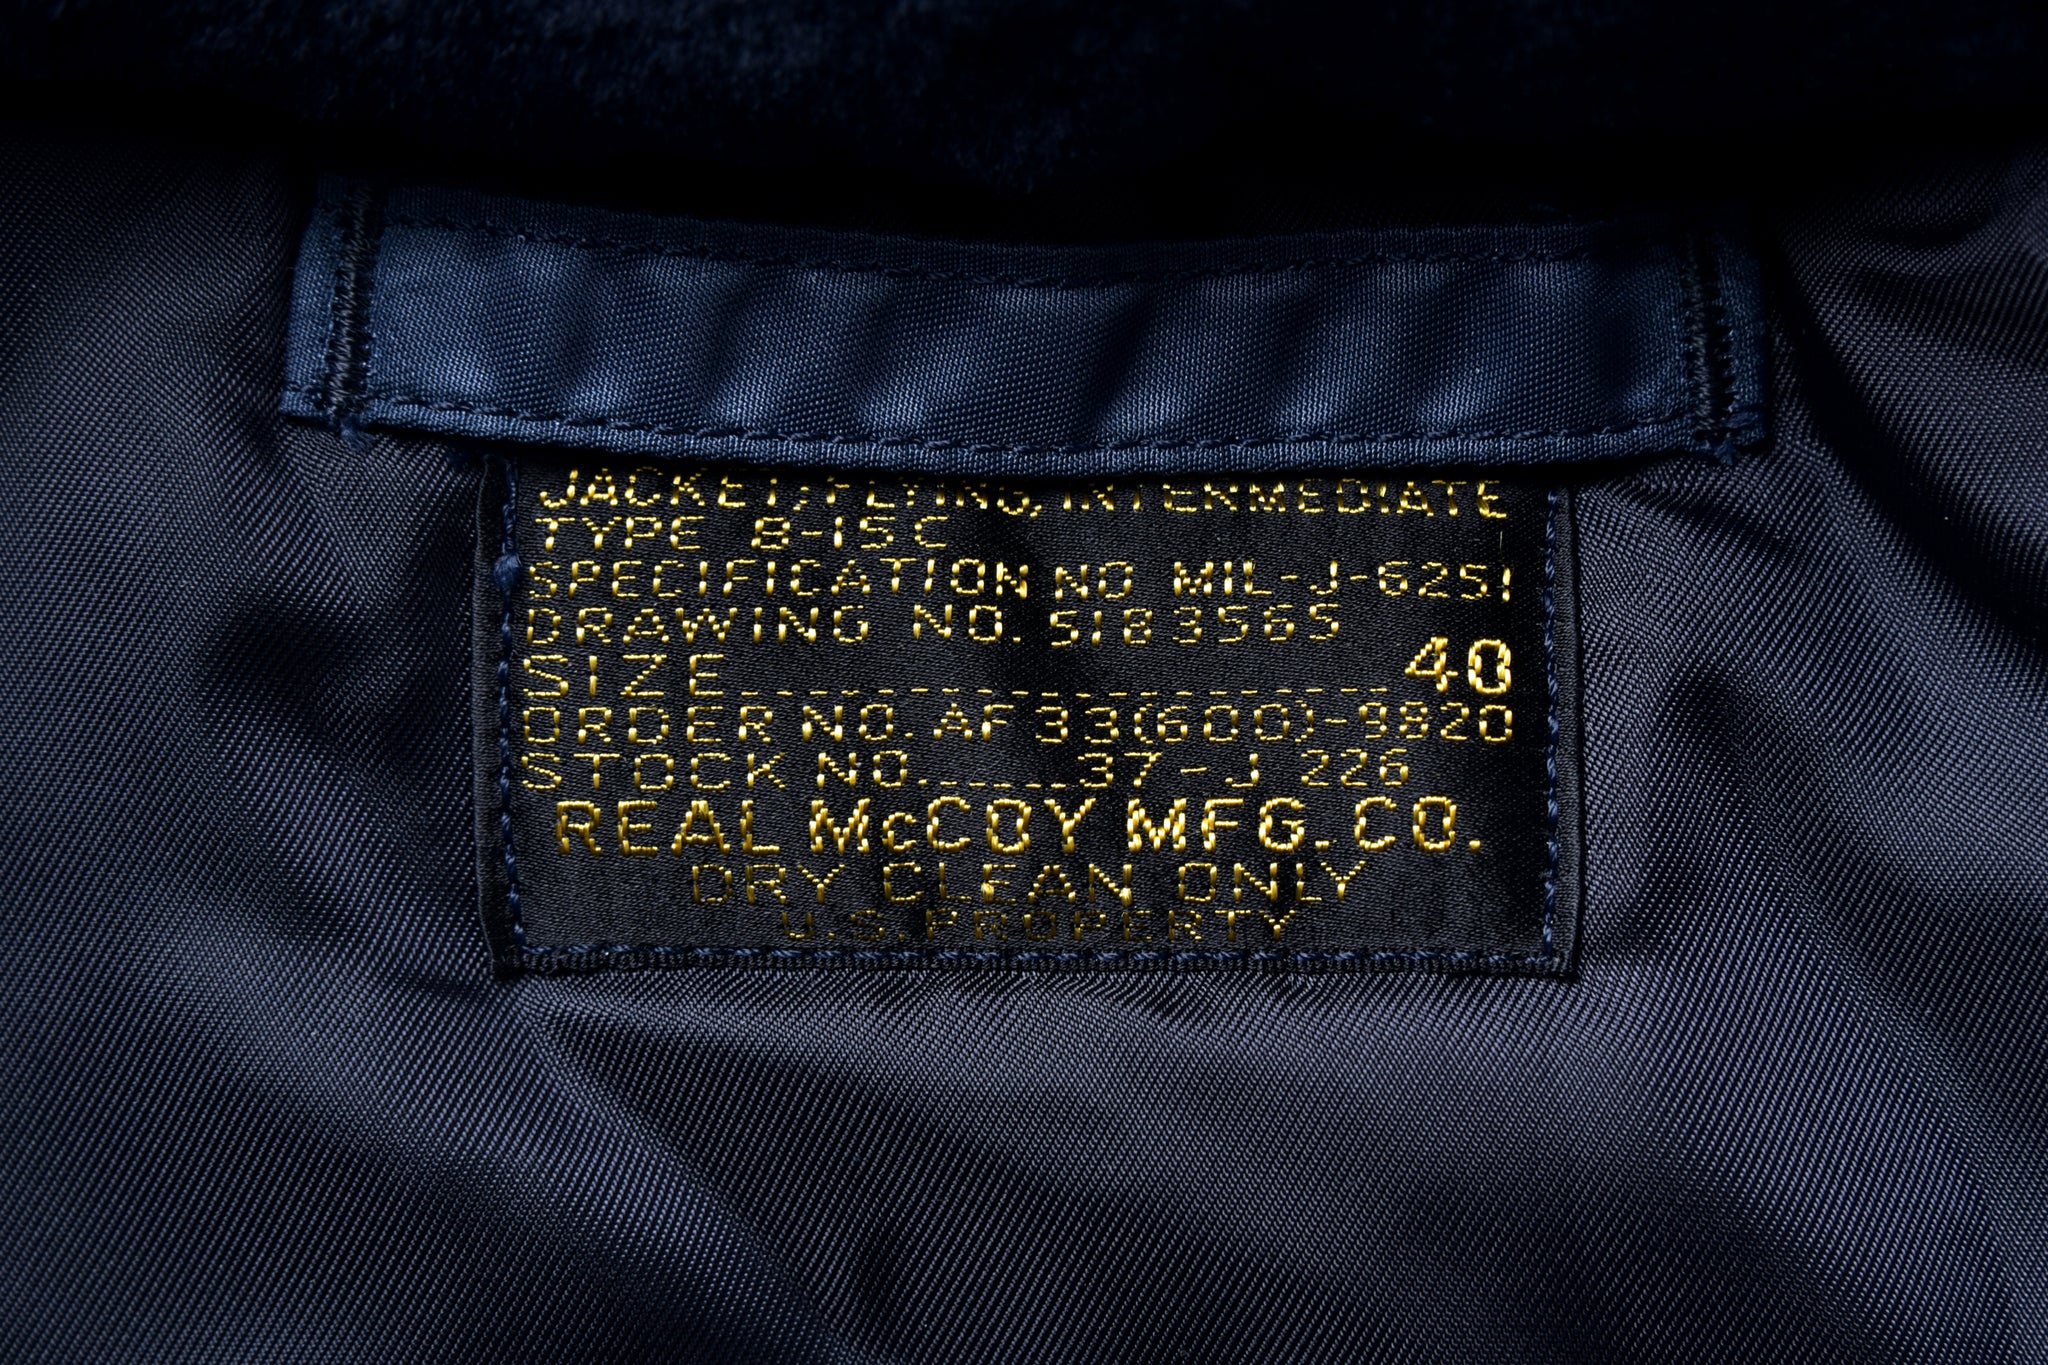 TYPE B-15C REAL McCOY MFG. CO. / GREEN RIBBING – The Real McCoy's